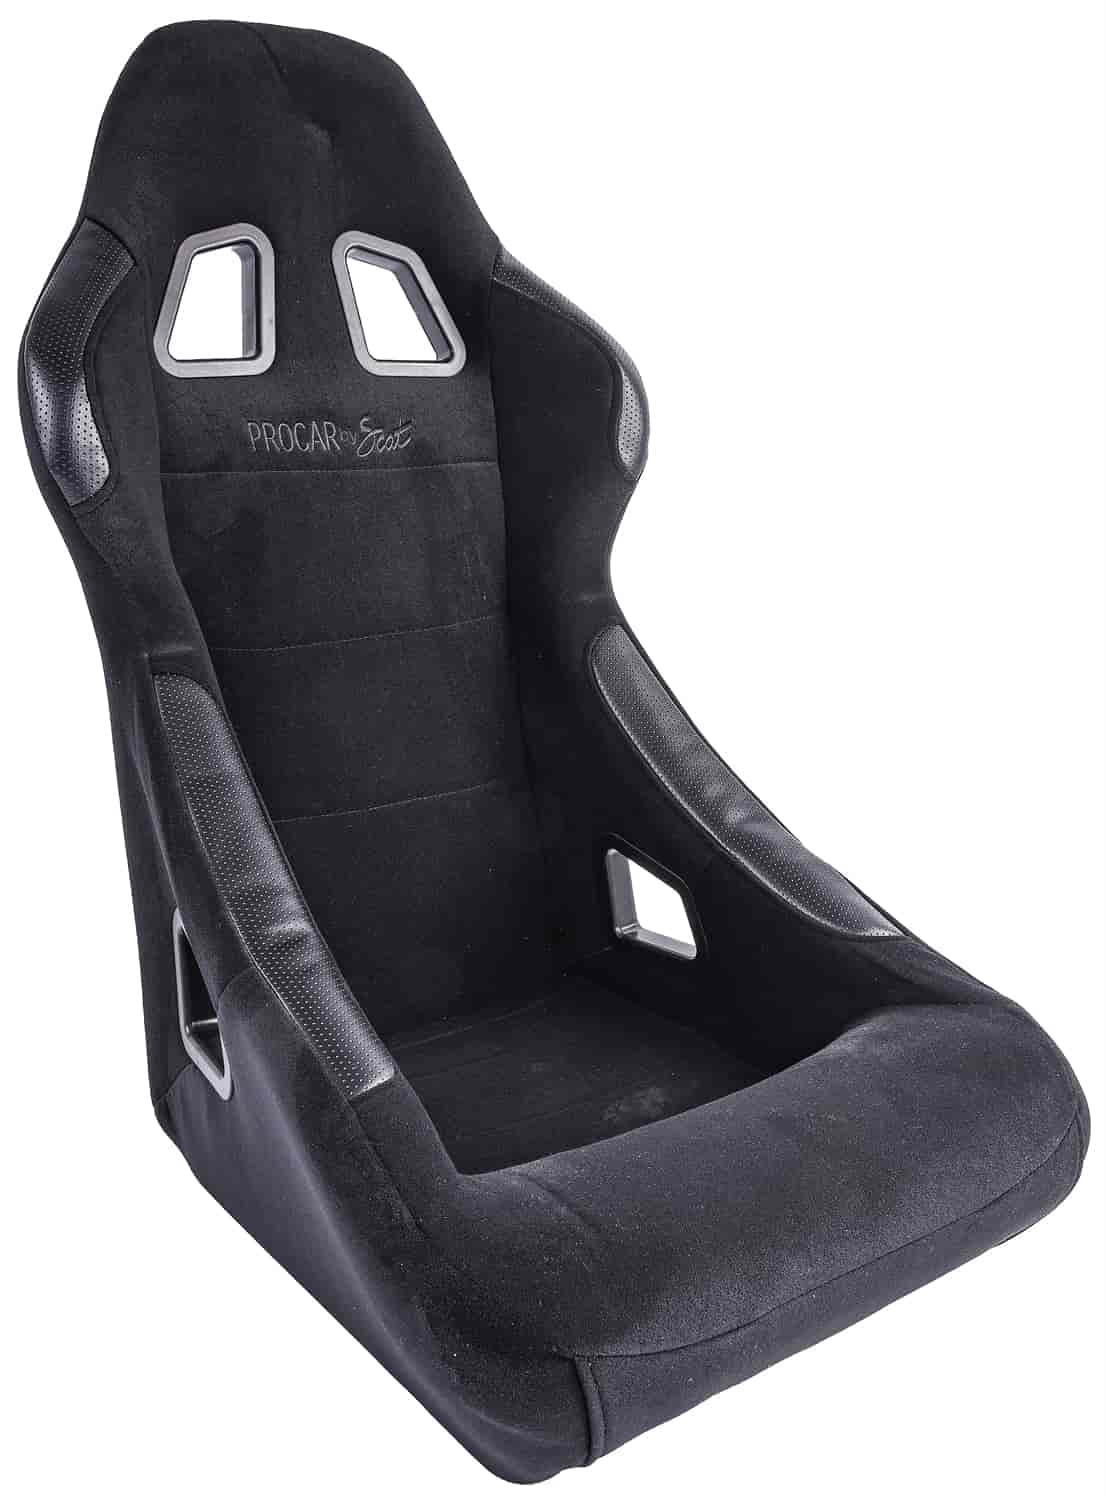 Pro Sport 1790 Seat Black Velour